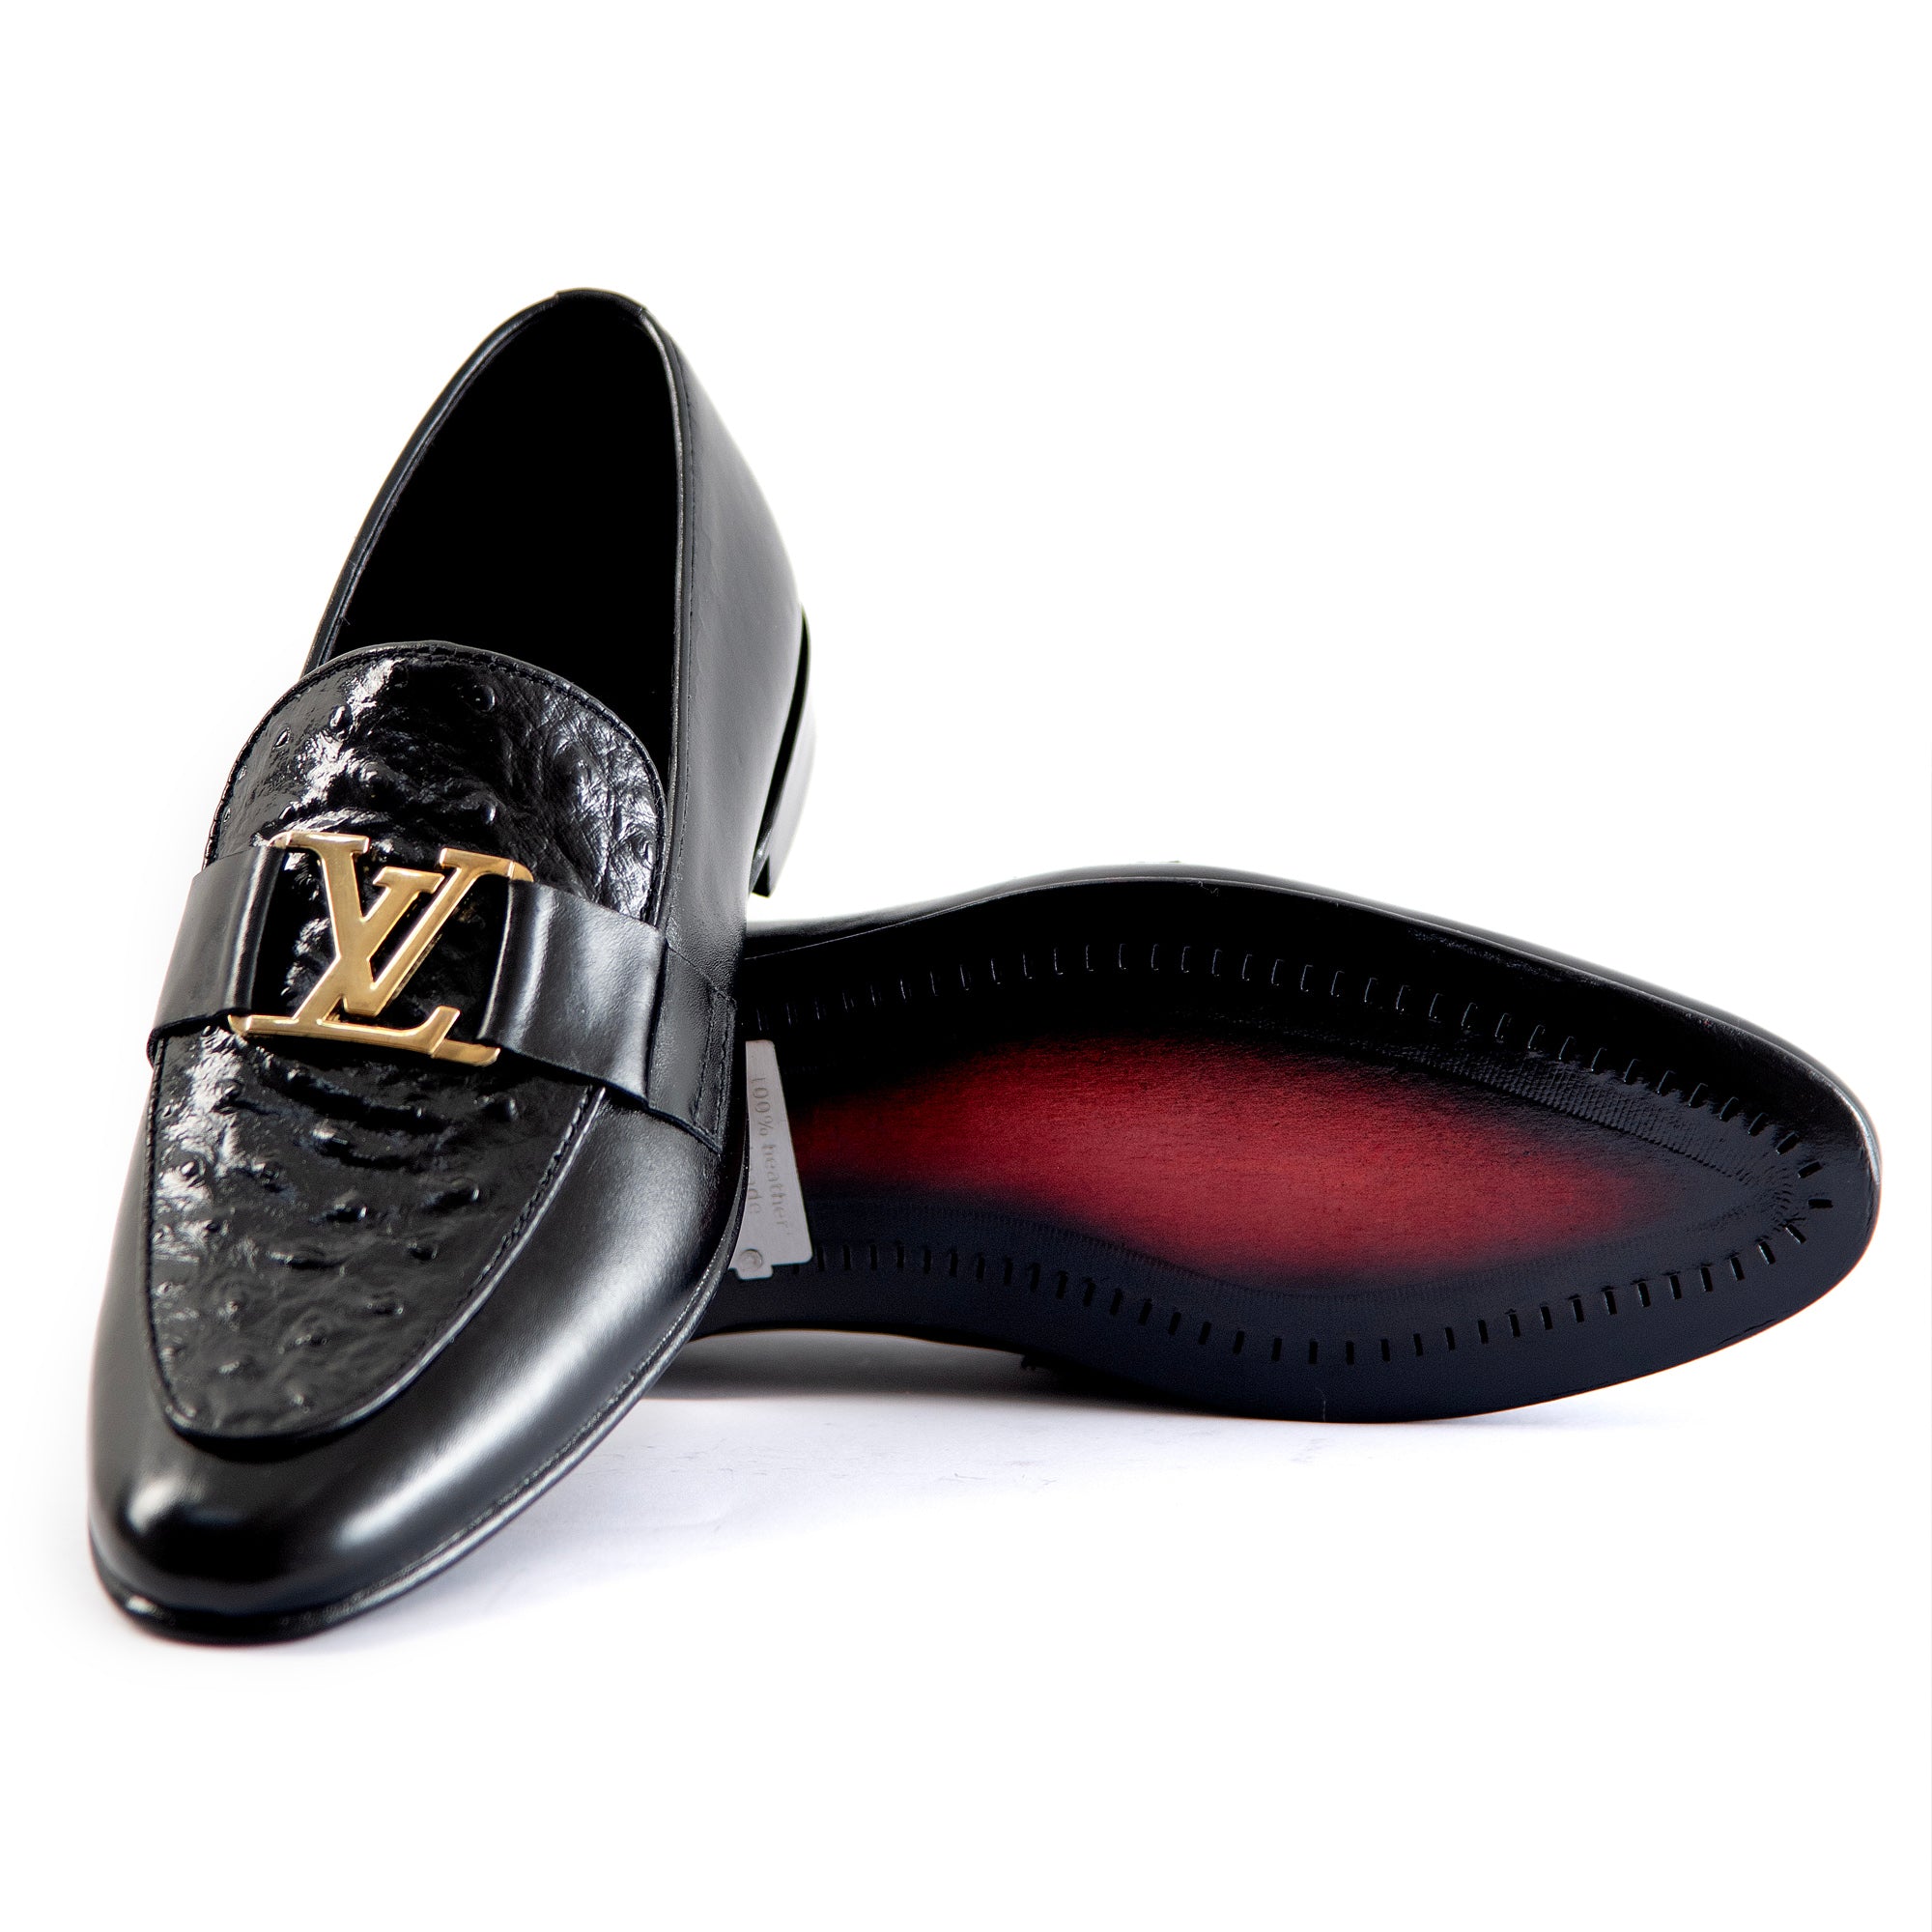 Royal V Ost Black - Premium Shoes from royalstepshops - Just Rs.9000! Shop now at ROYAL STEP